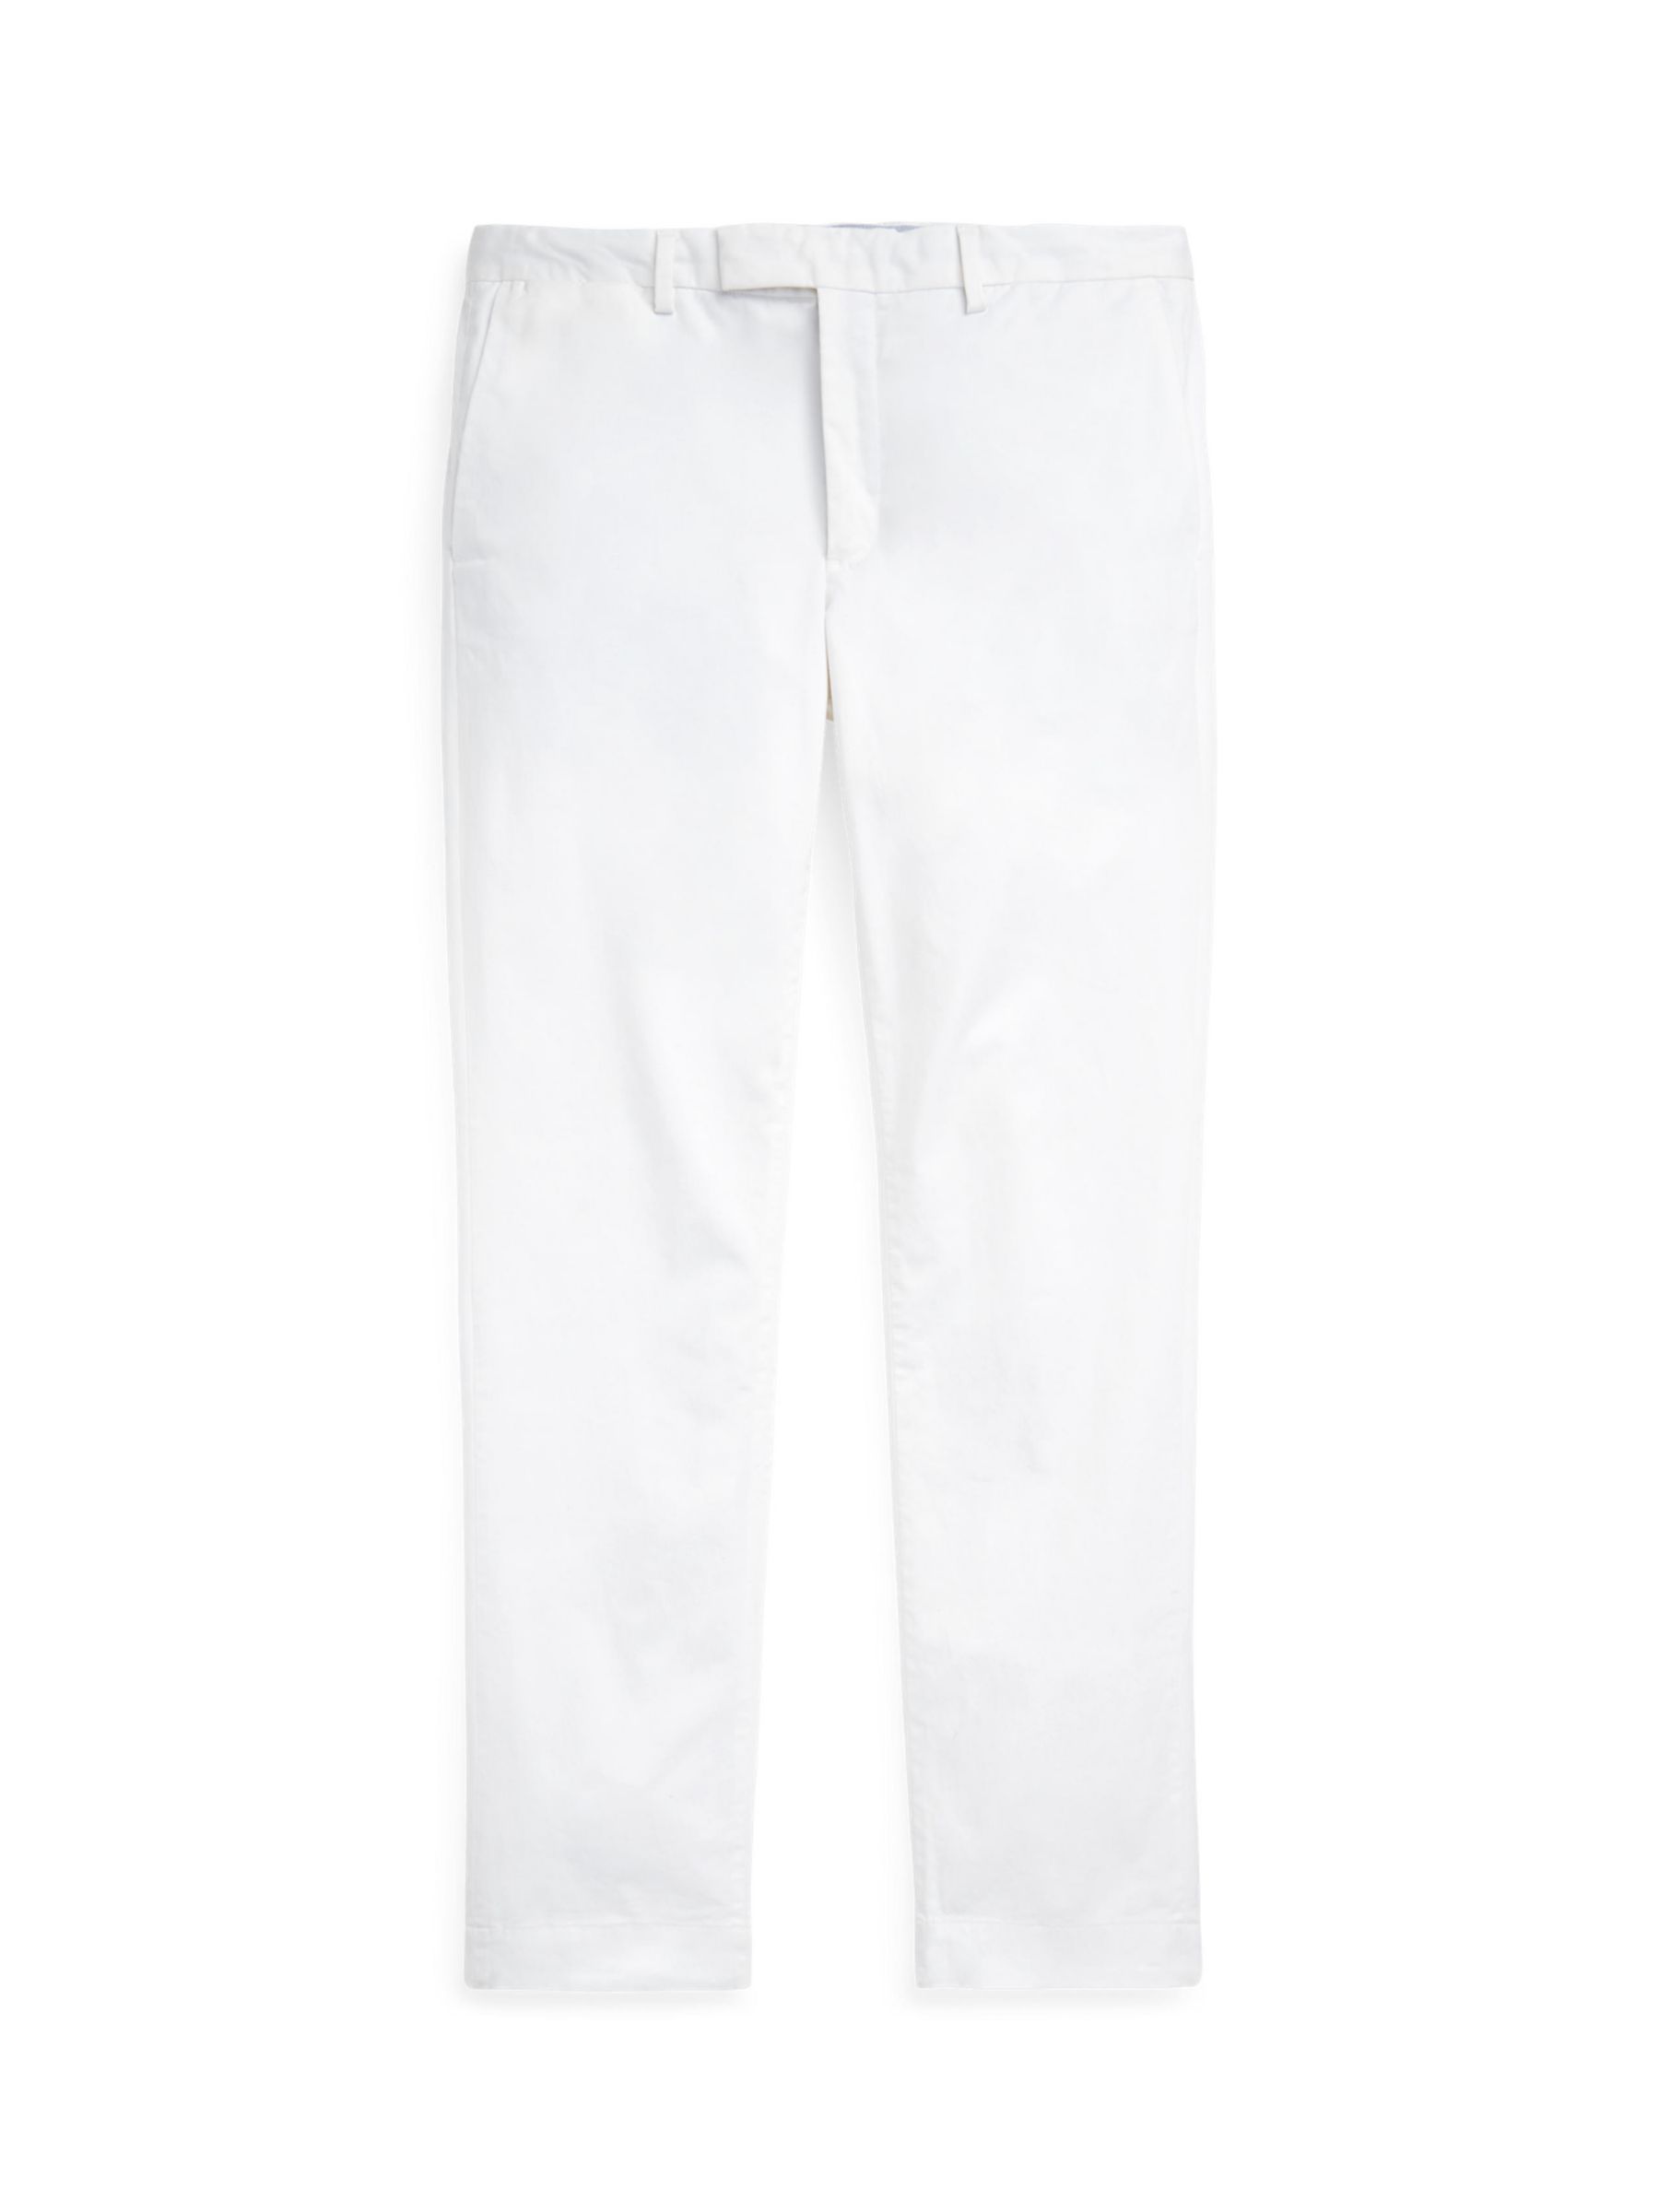 Ralph Lauren Slim Stretch Chino Trousers, White at John Lewis & Partners